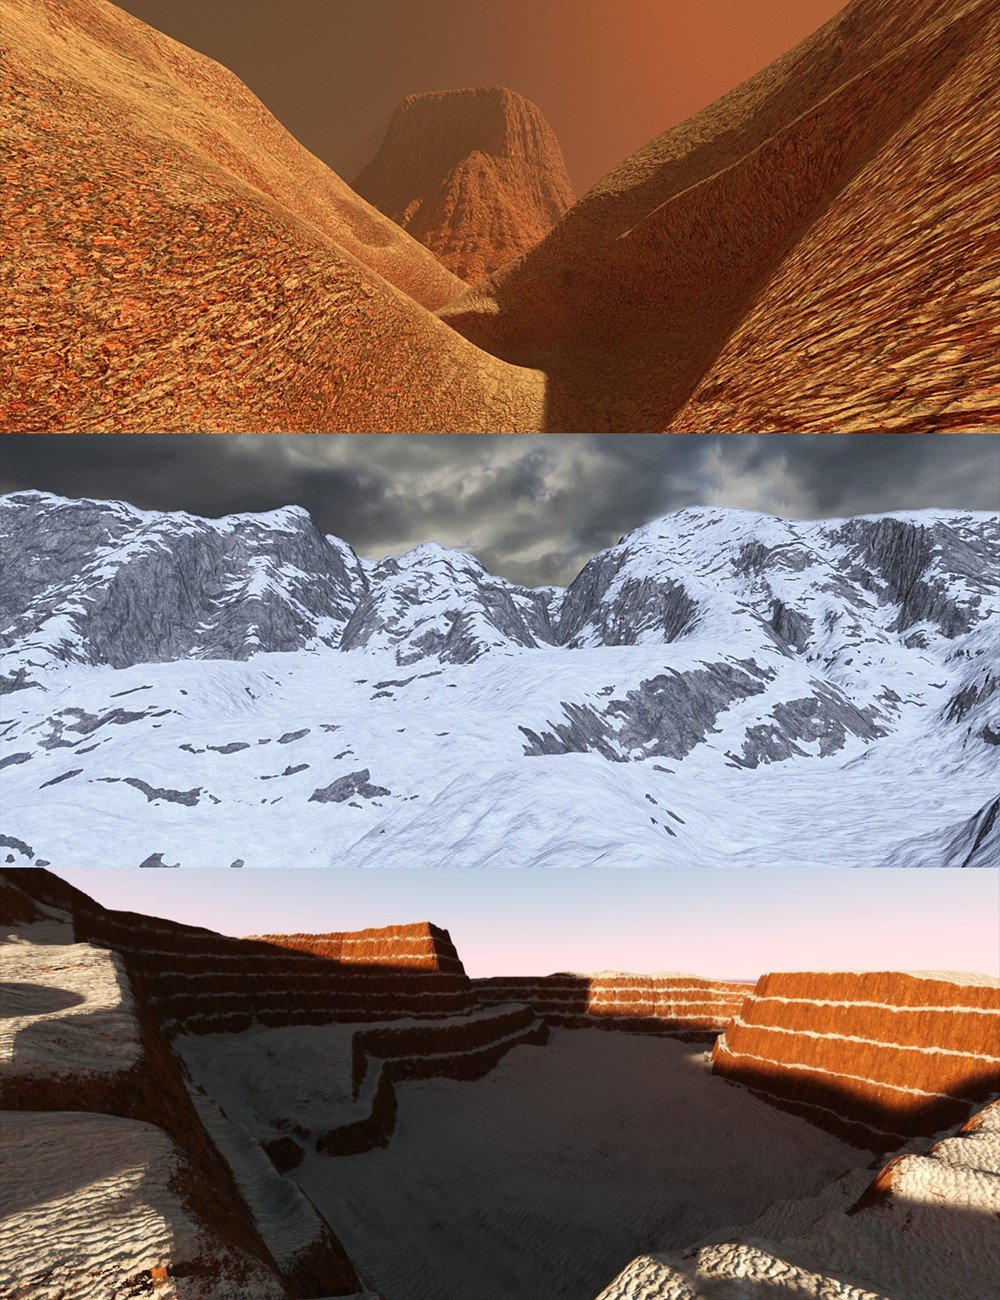 Terrain Morphs for TerraDome3 Volume 1 by: dglidden, 3D Models by Daz 3D